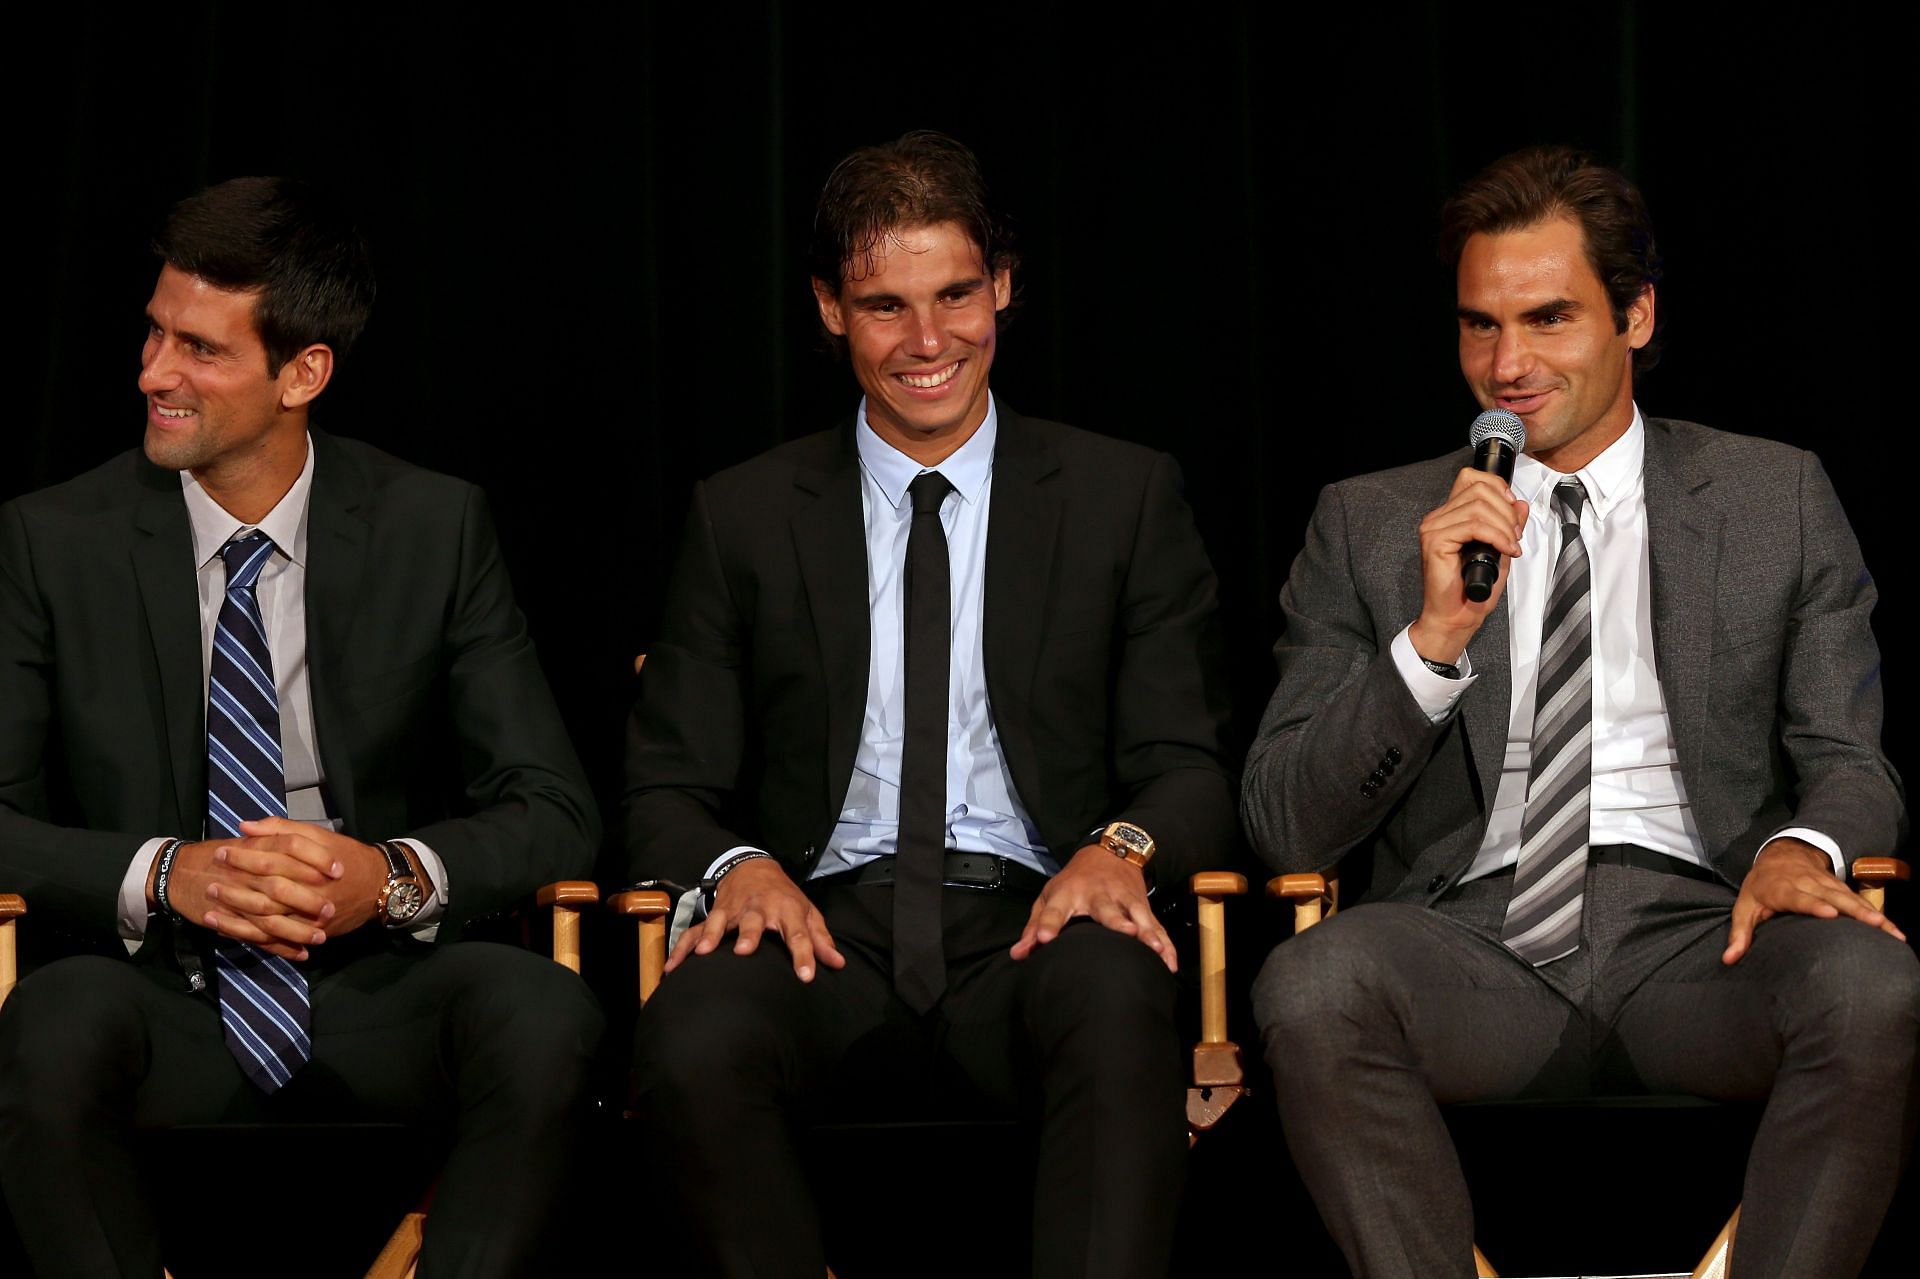 Novak Djokovic, Rafael Nadal, and Roger Federer